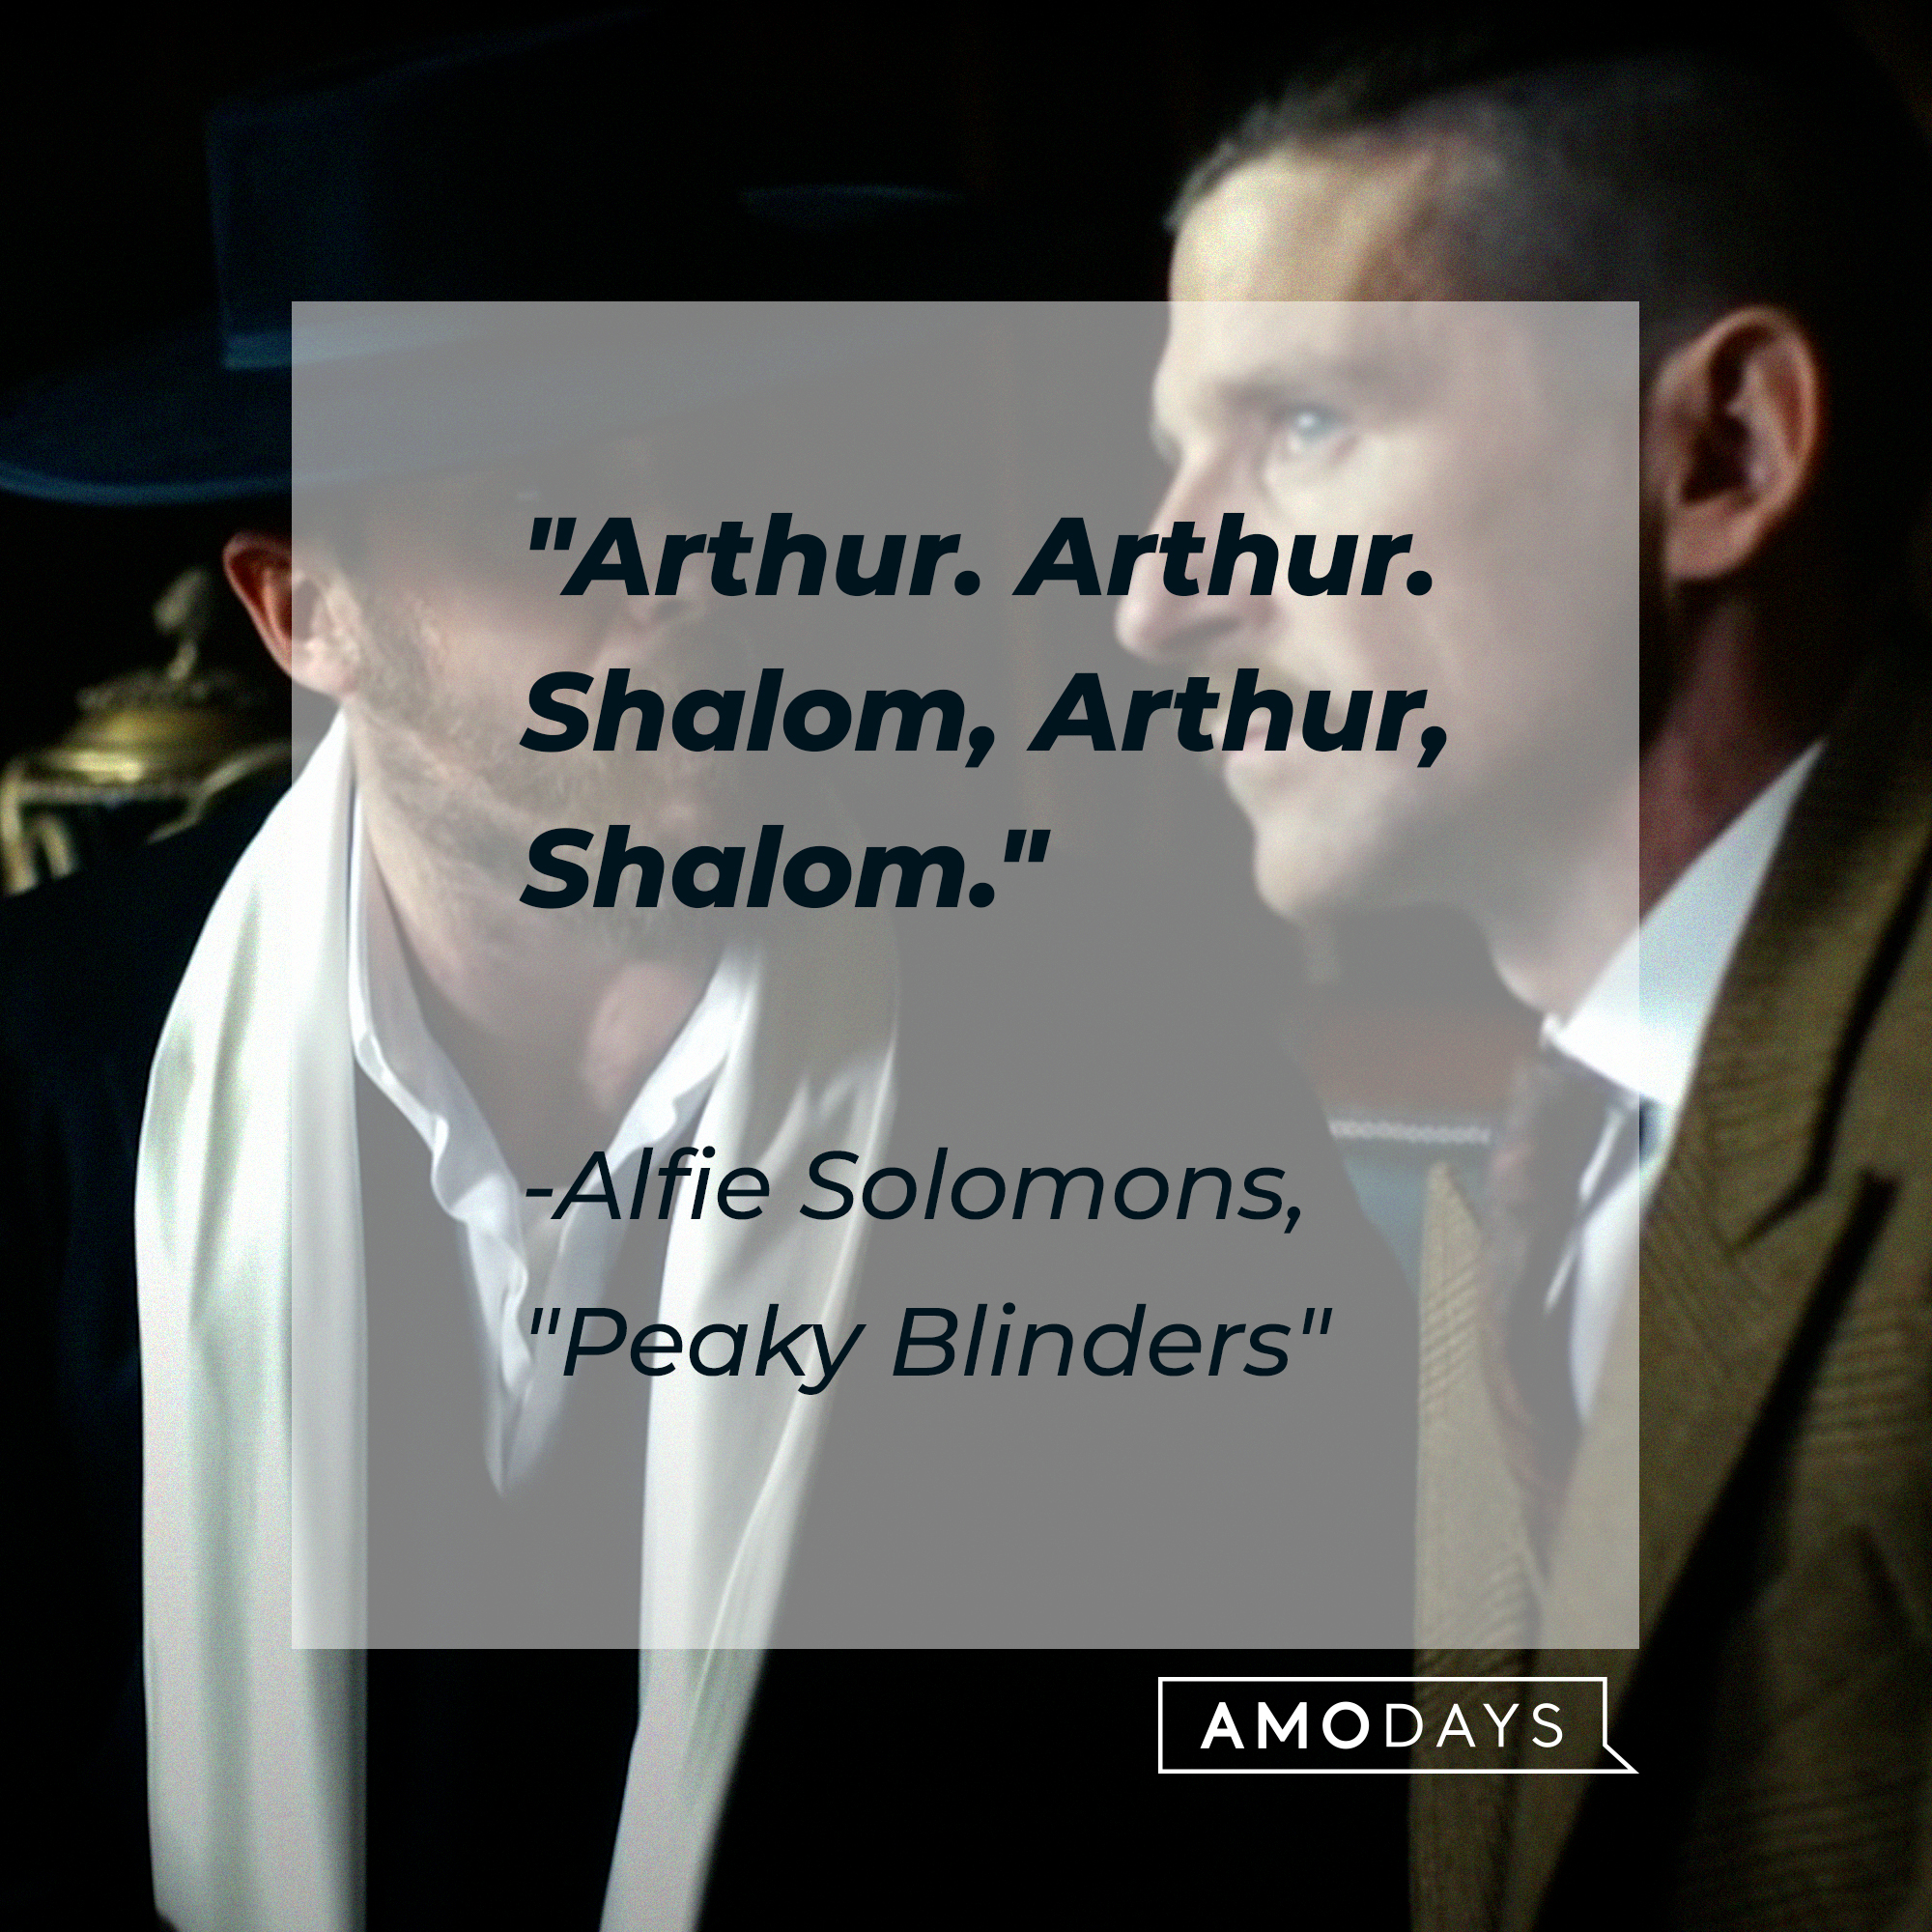 Alfie Solomons’s quote: "Arthur. Arthur. Shalom, Arthur, Shalom." | Source: facebook.com/PeakyBlinders